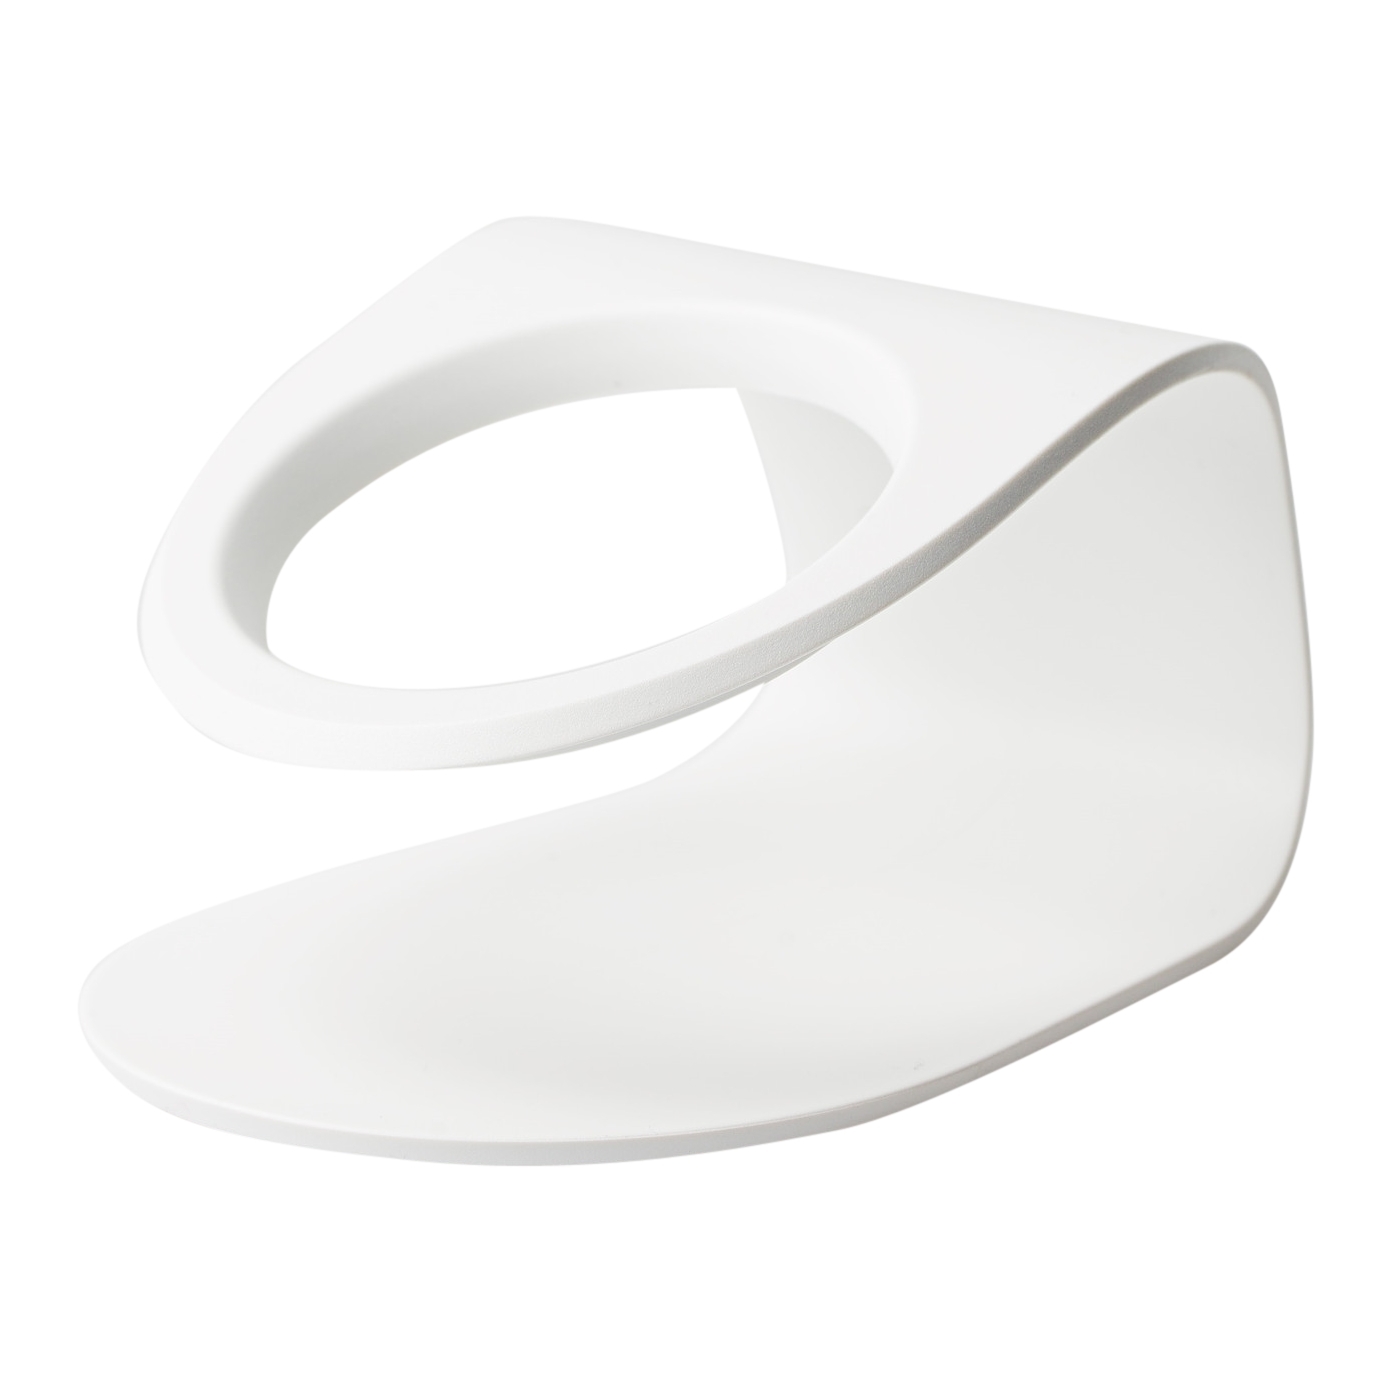 Pidan Designer Raised Cat Bowl with White Base image 1